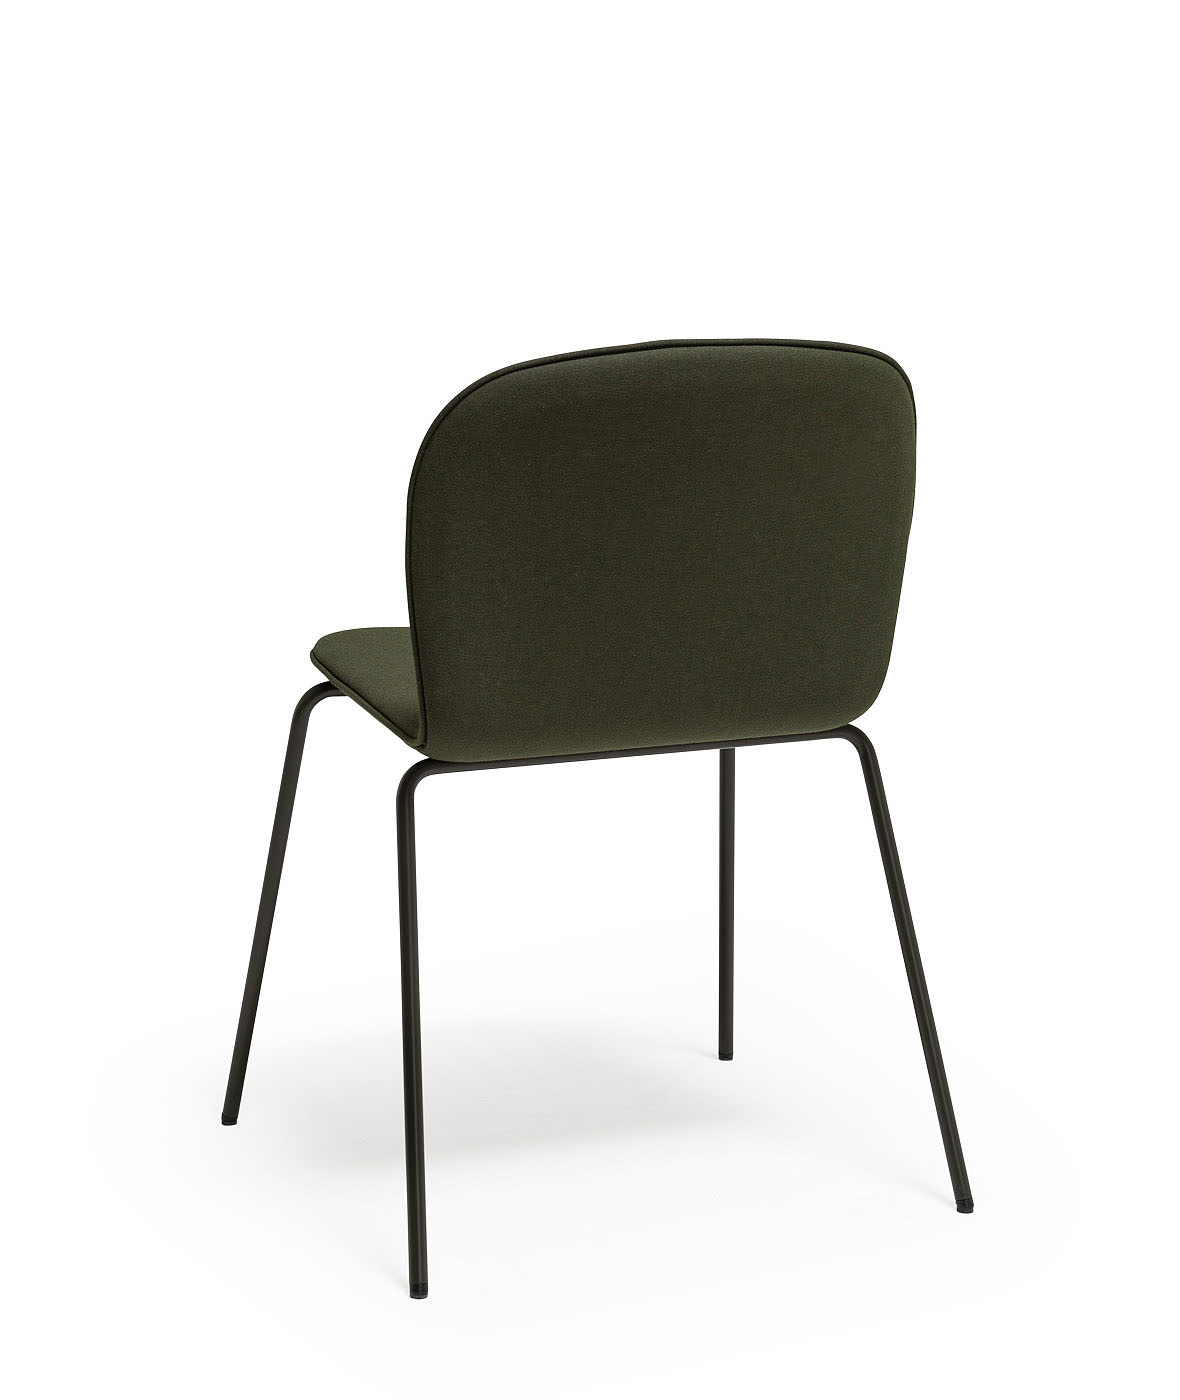 Ona chair with metallic legs - Vergés